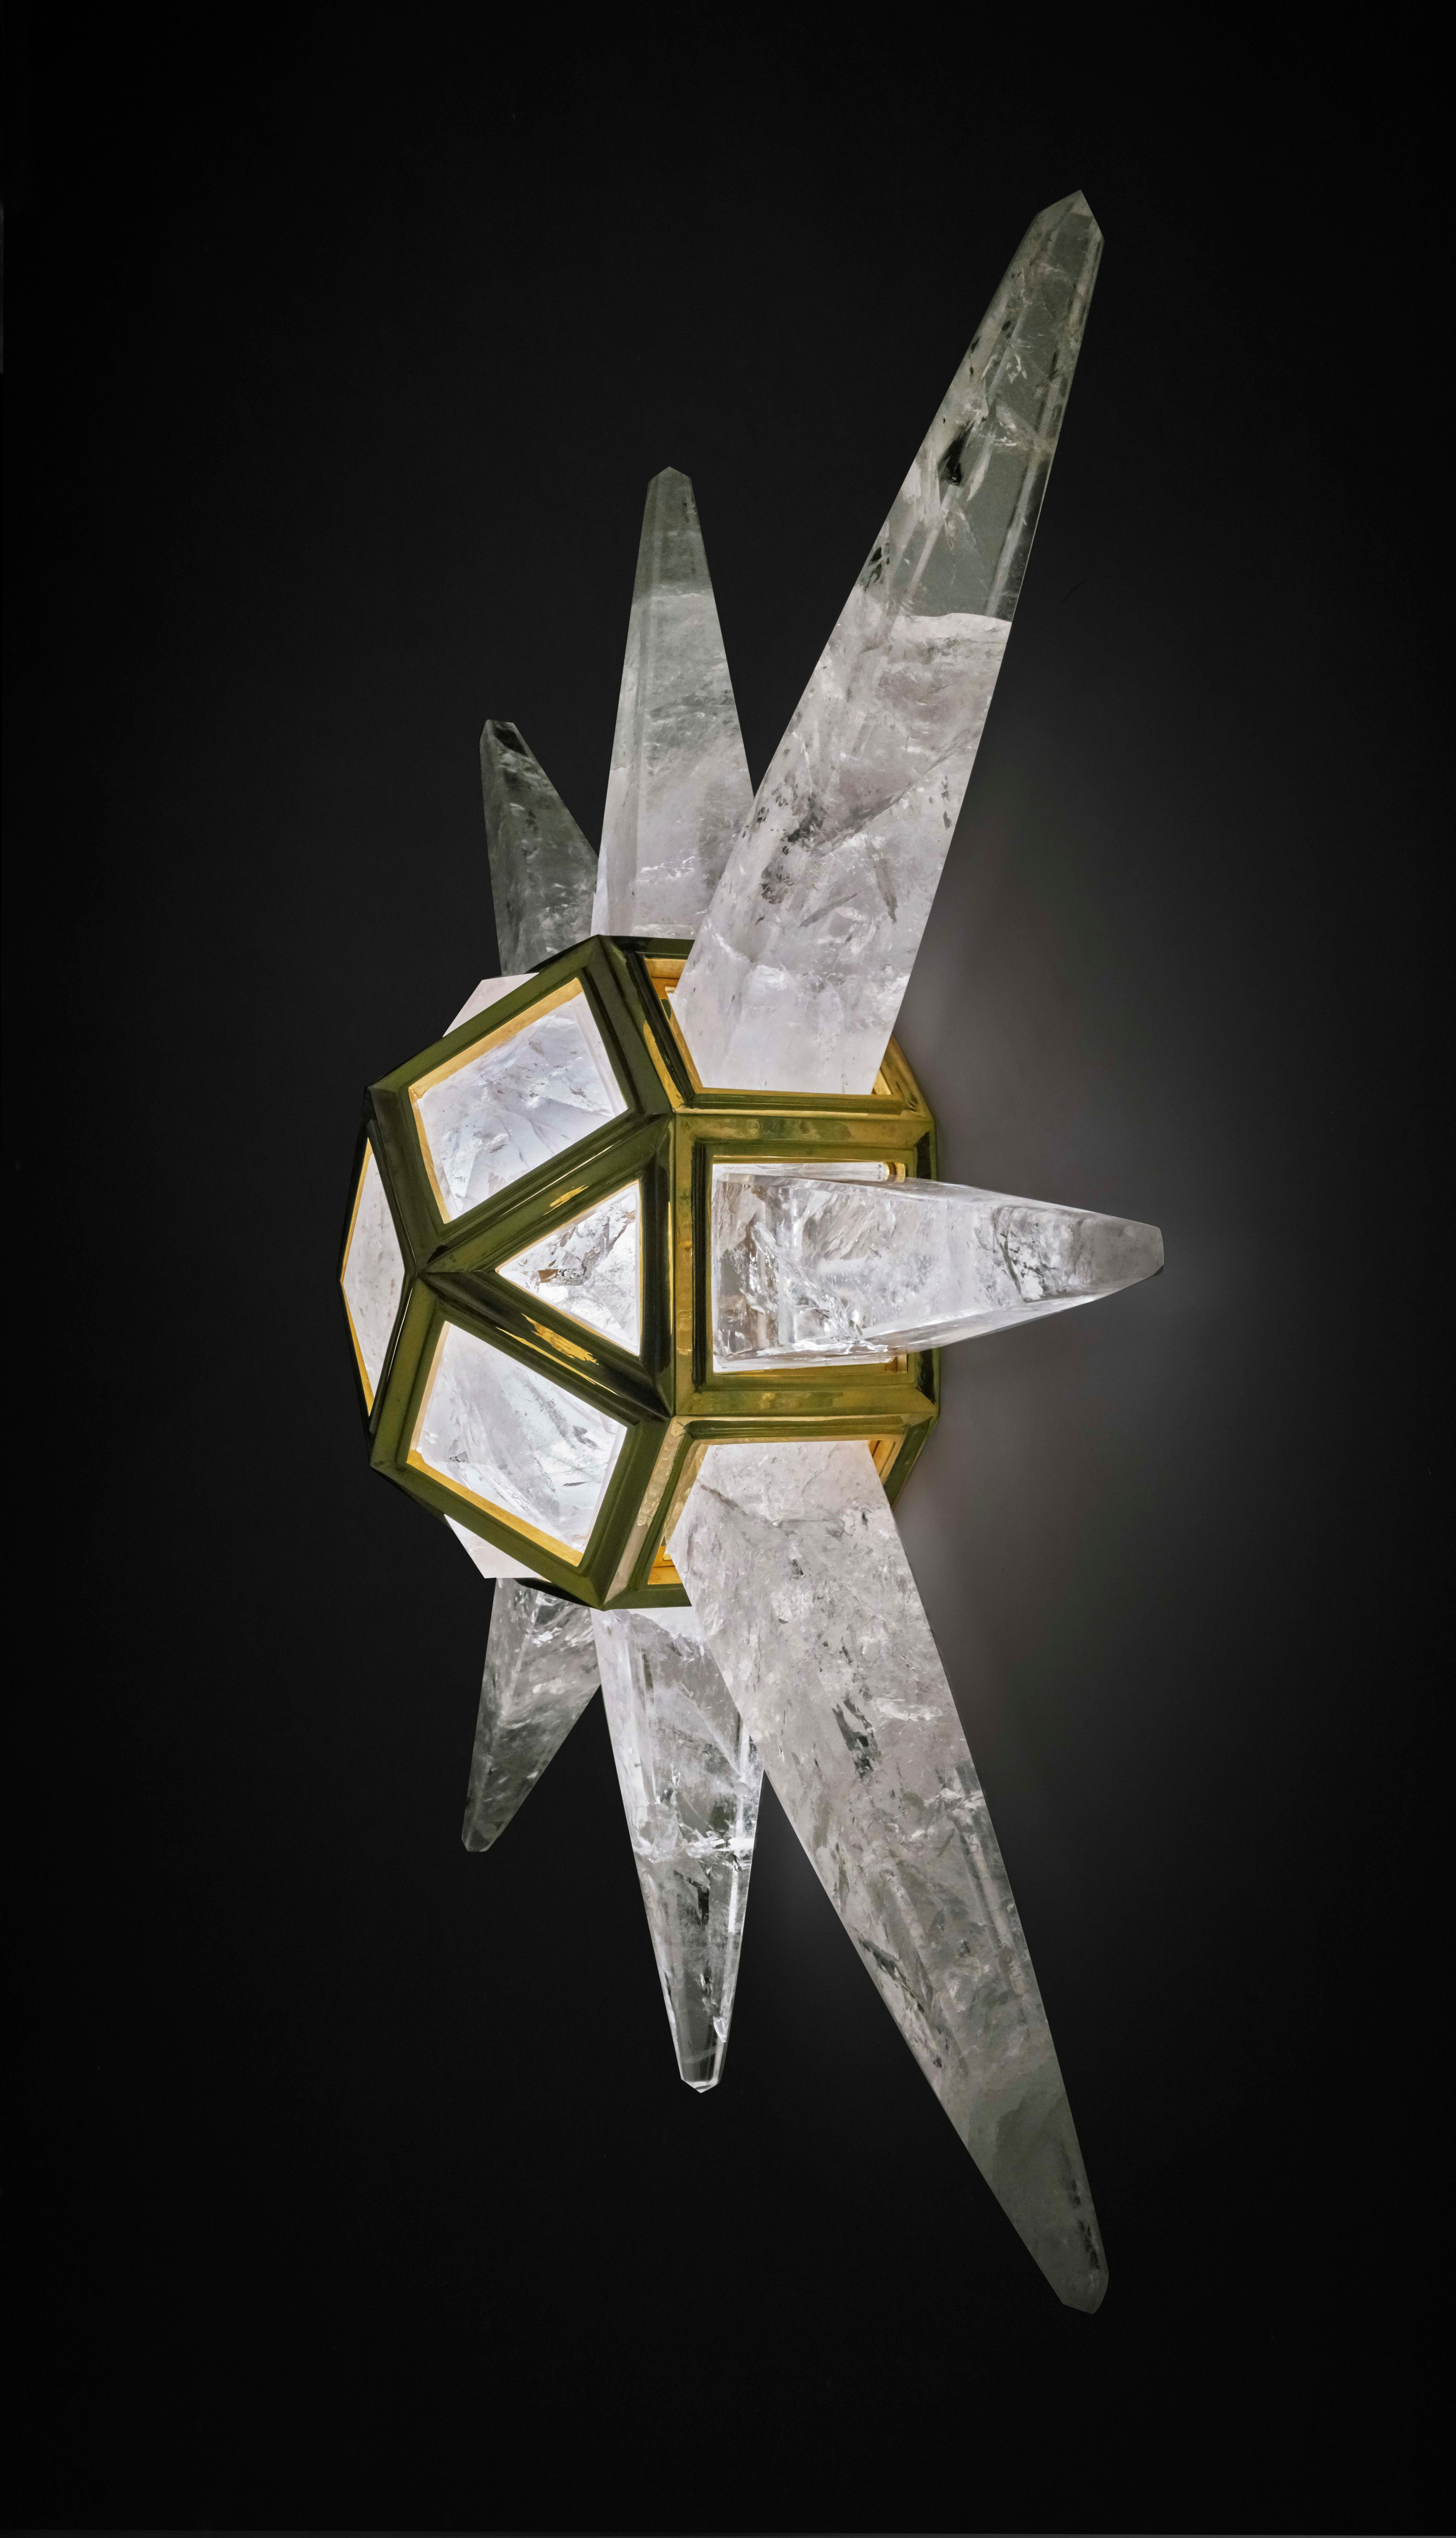 Art Deco Starburst Rock Crystal 24-Karat Gold-Plated Bronze Wall-Light Sculpture For Sale